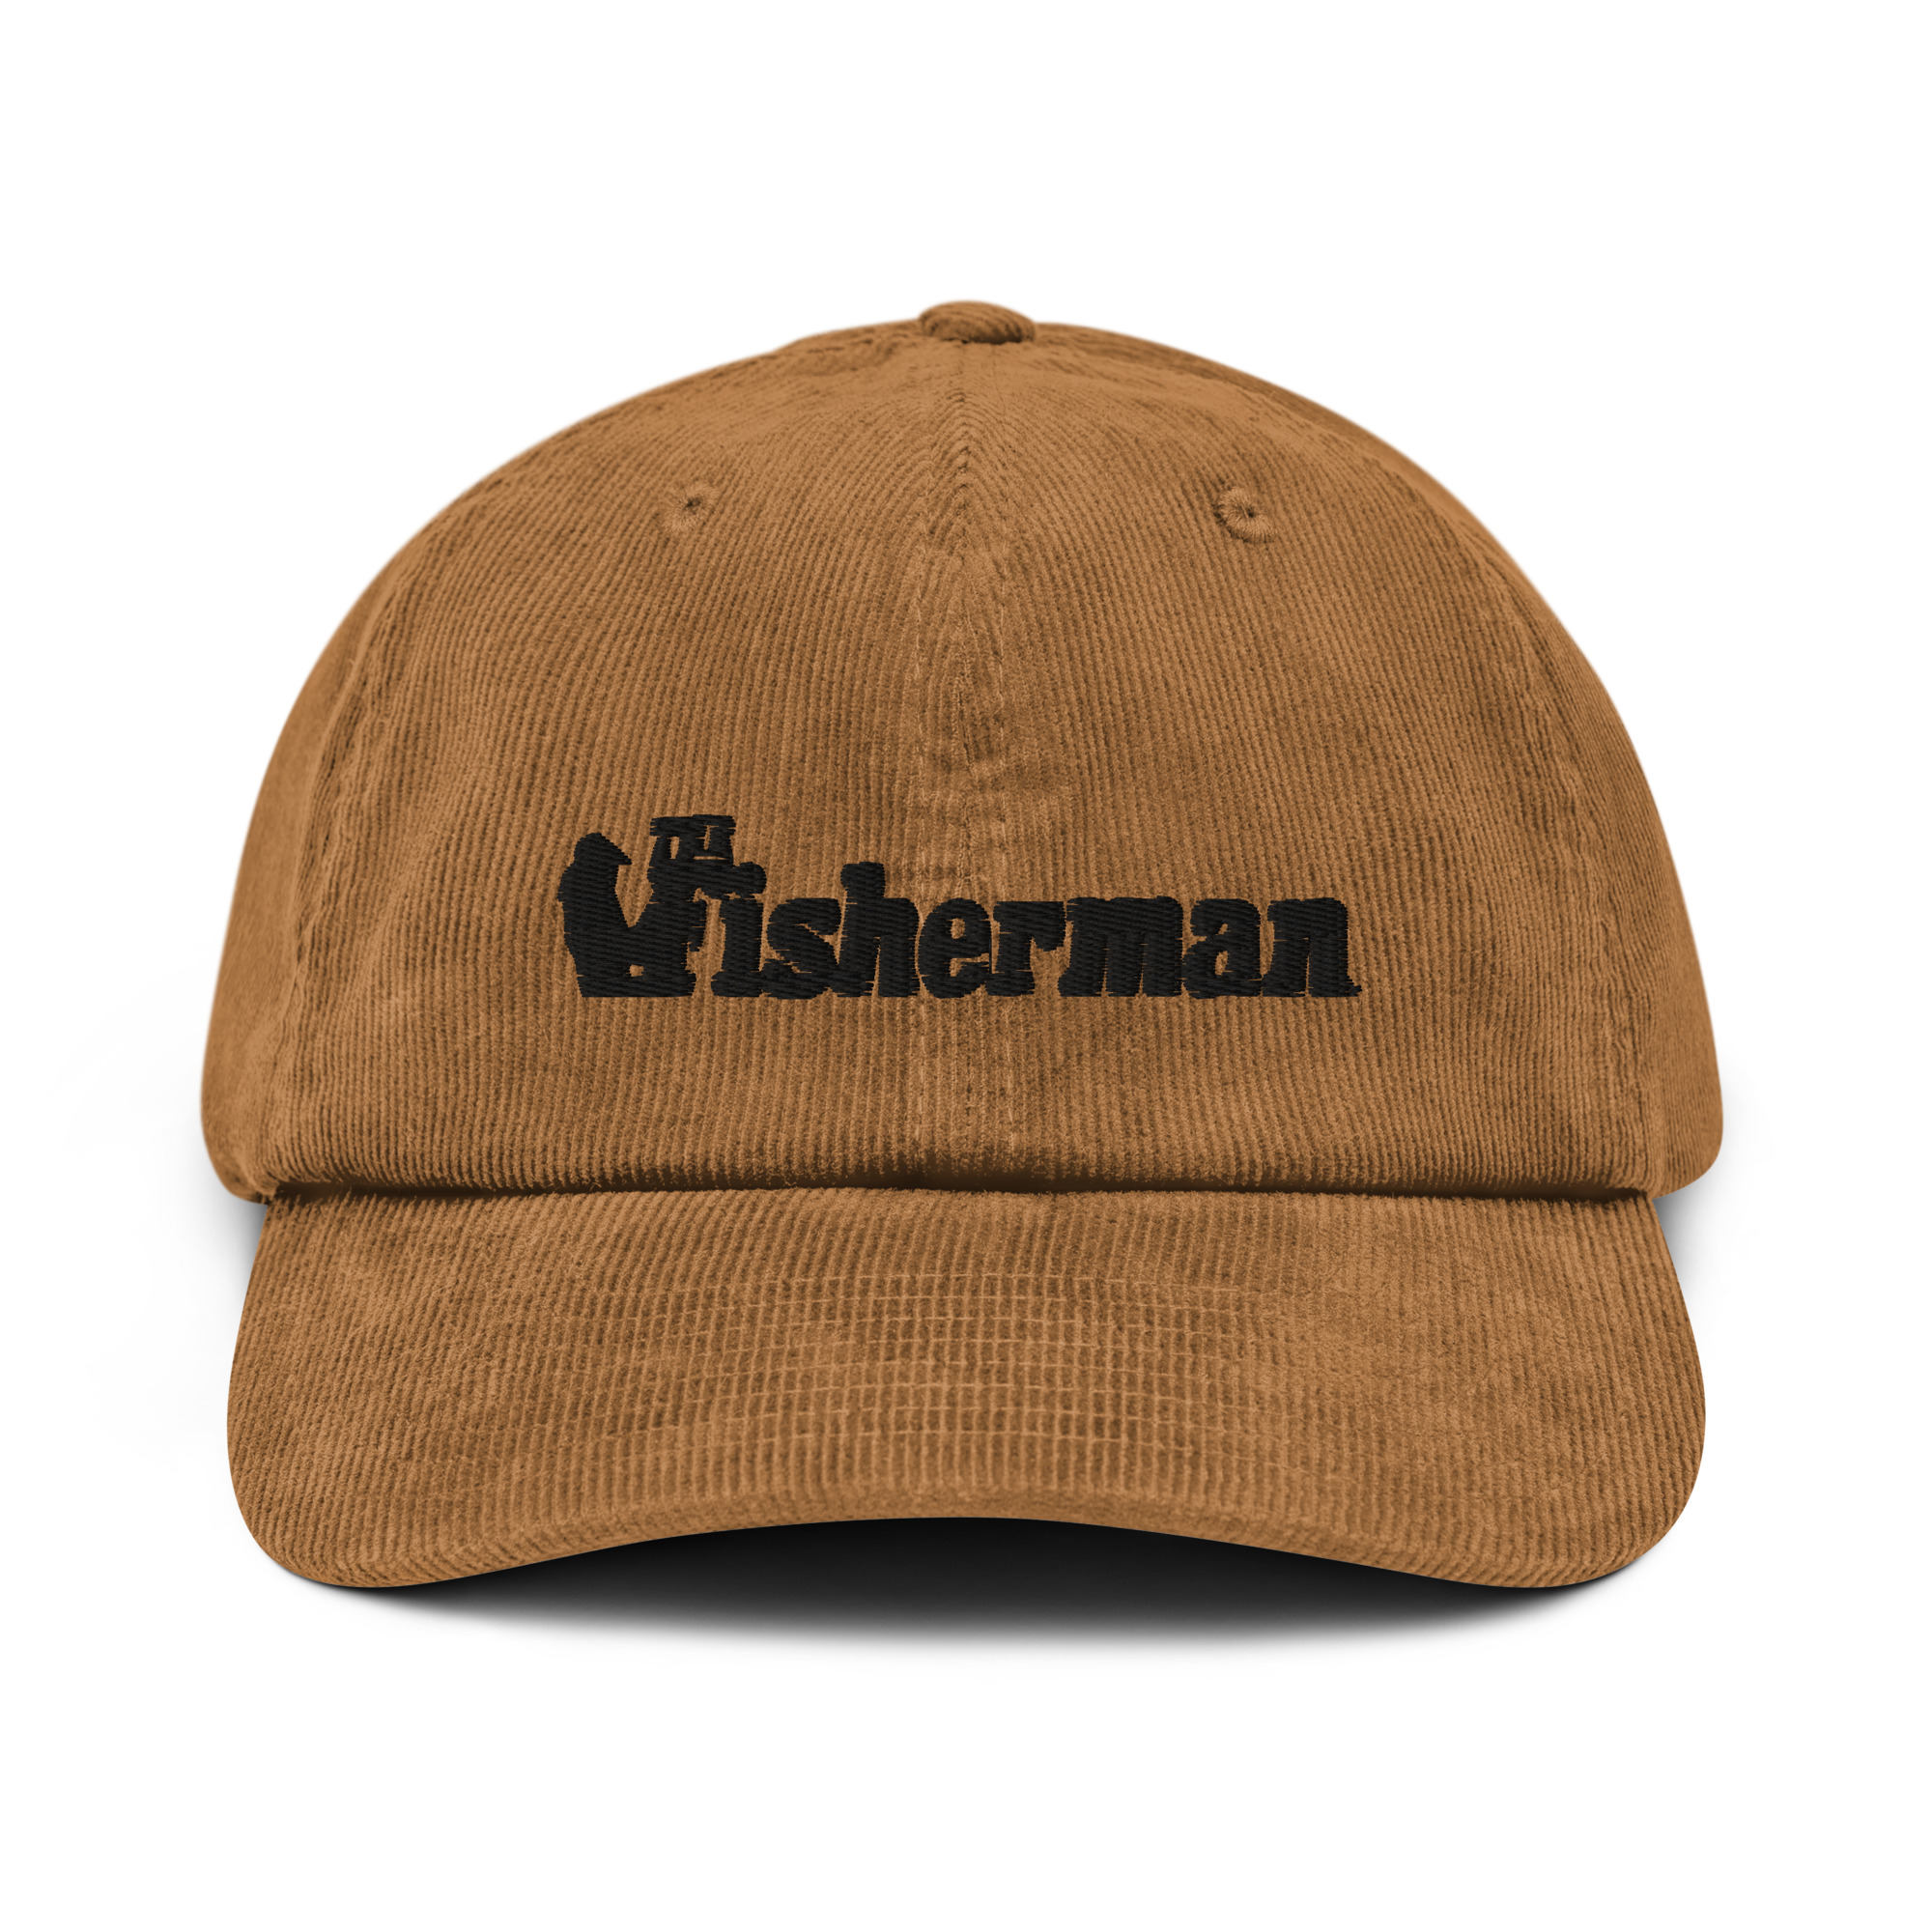 Corduroy hat - The Fisherman